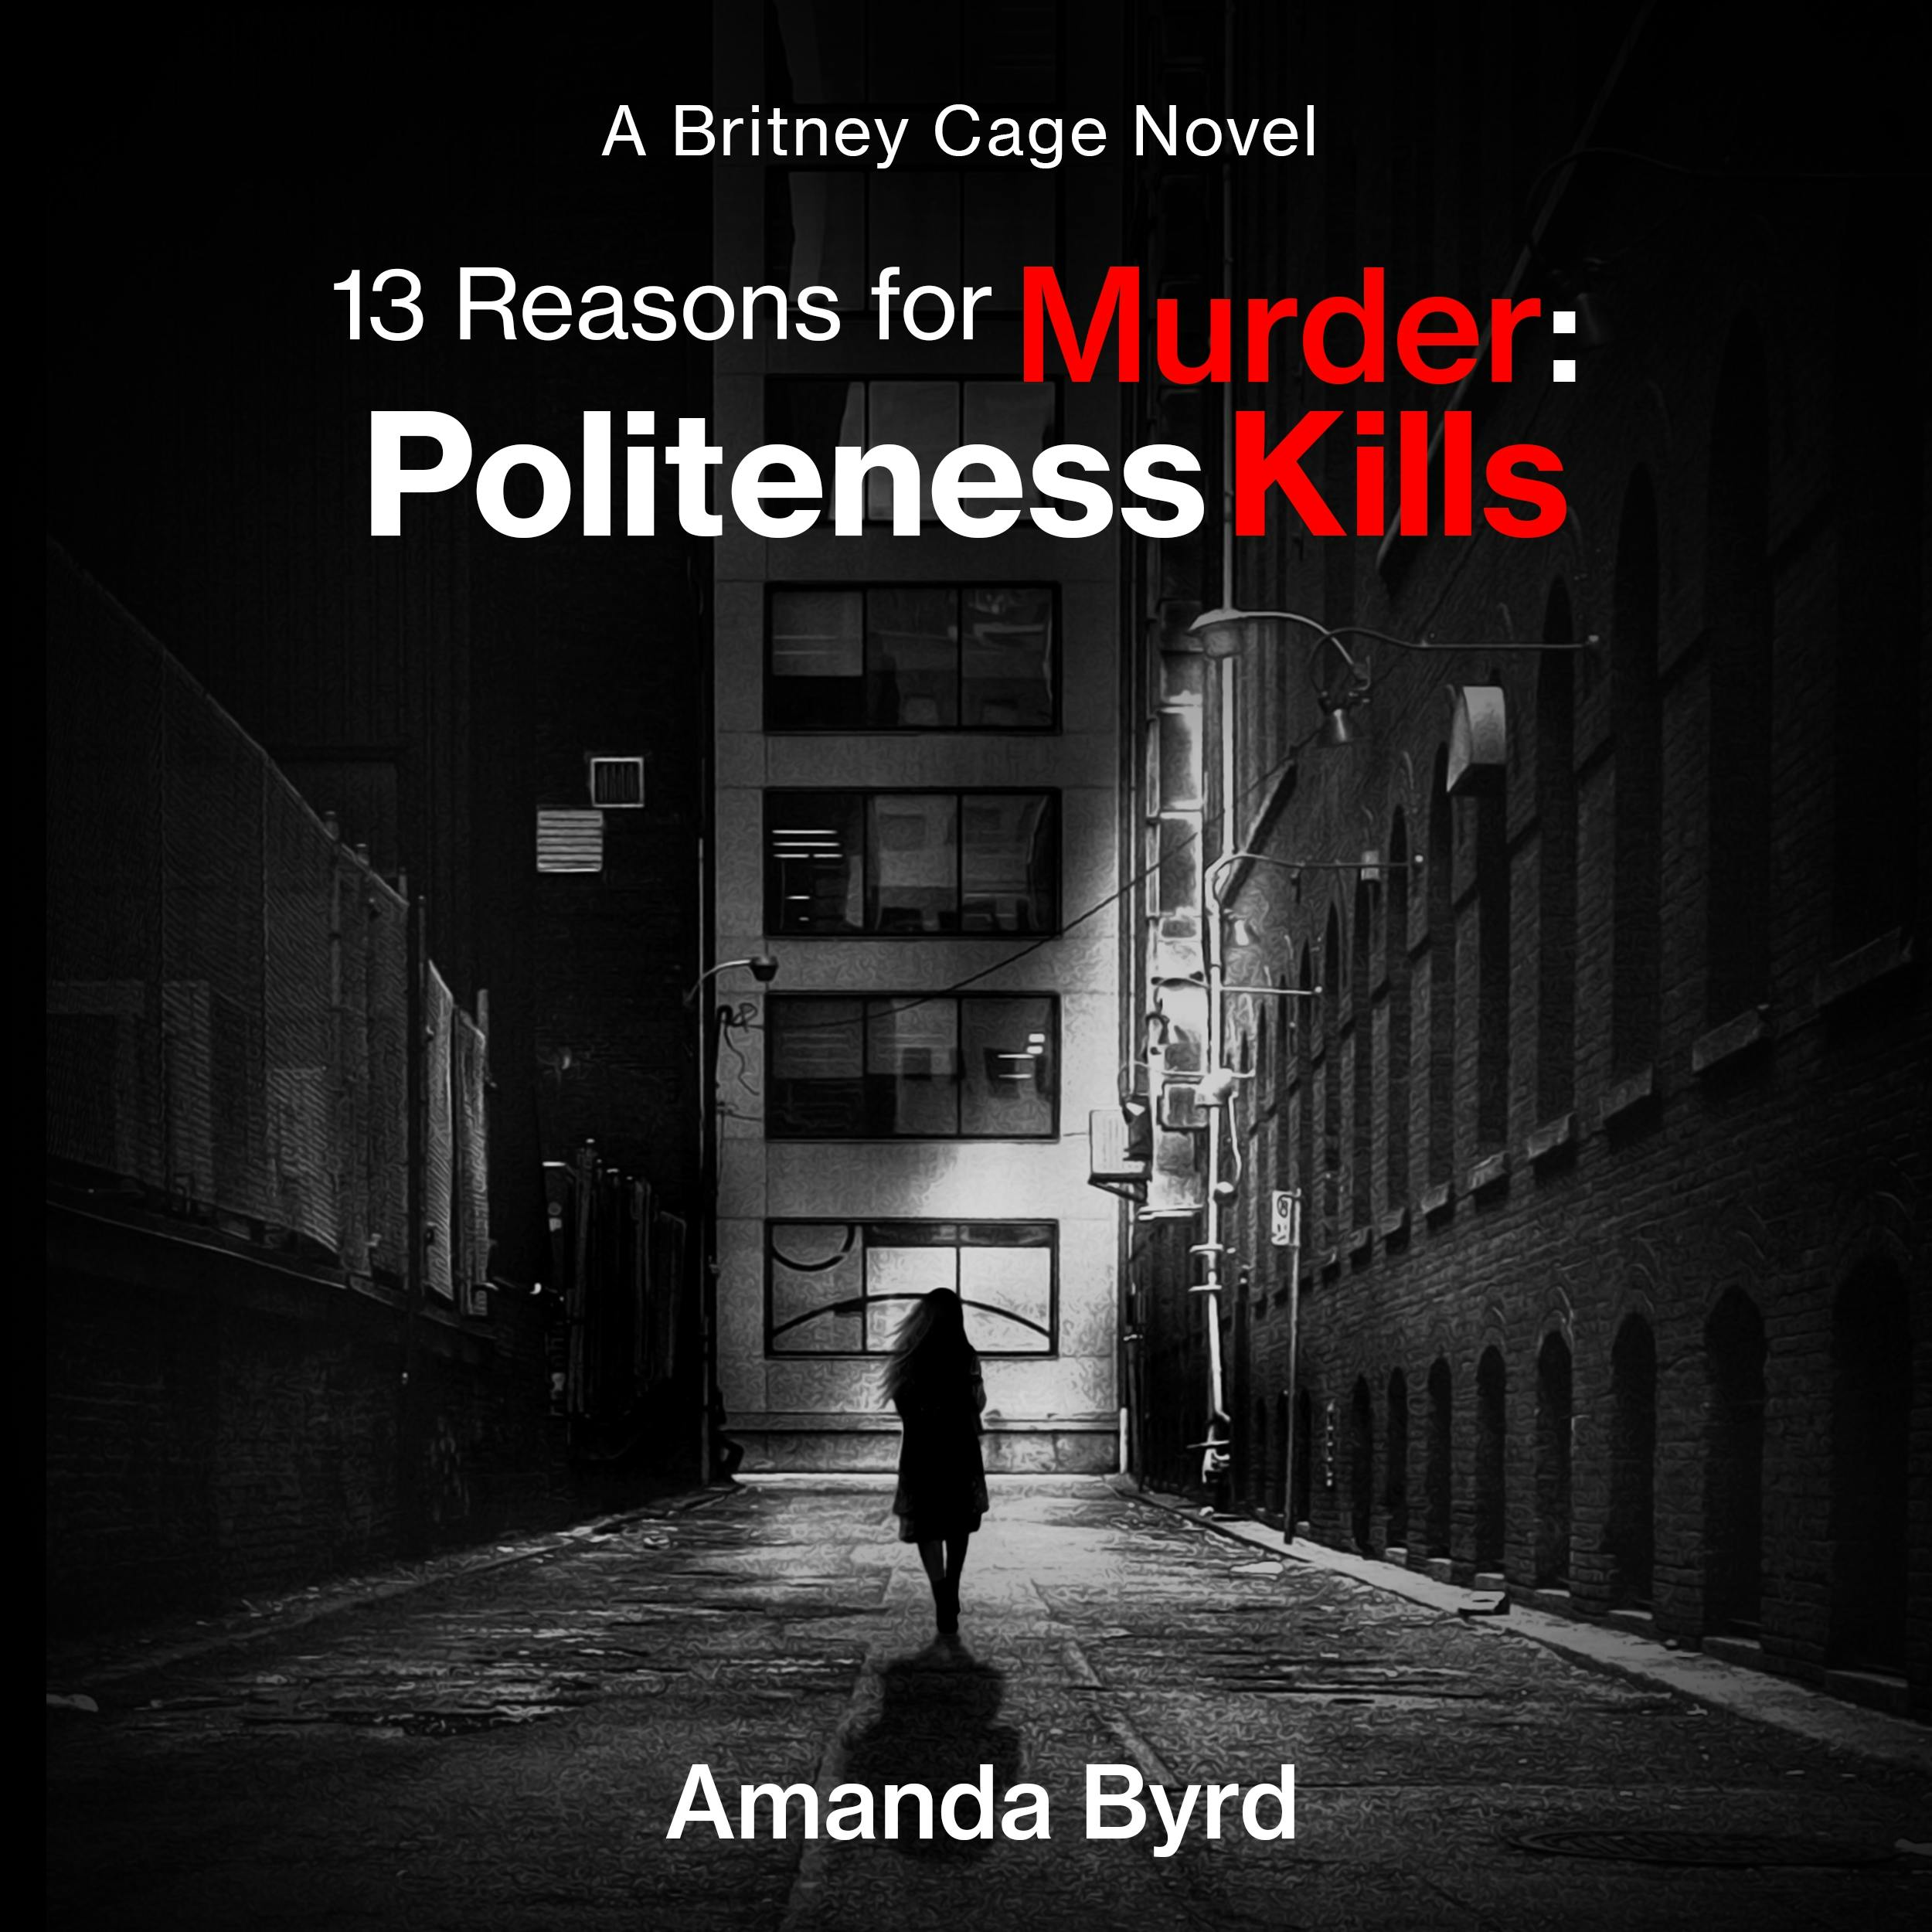 13 Reasons for Murder: Politeness Kills: A Britney Cage Serial Killer Novel (13 Reasons for Murder #1) - Amanda Byrd